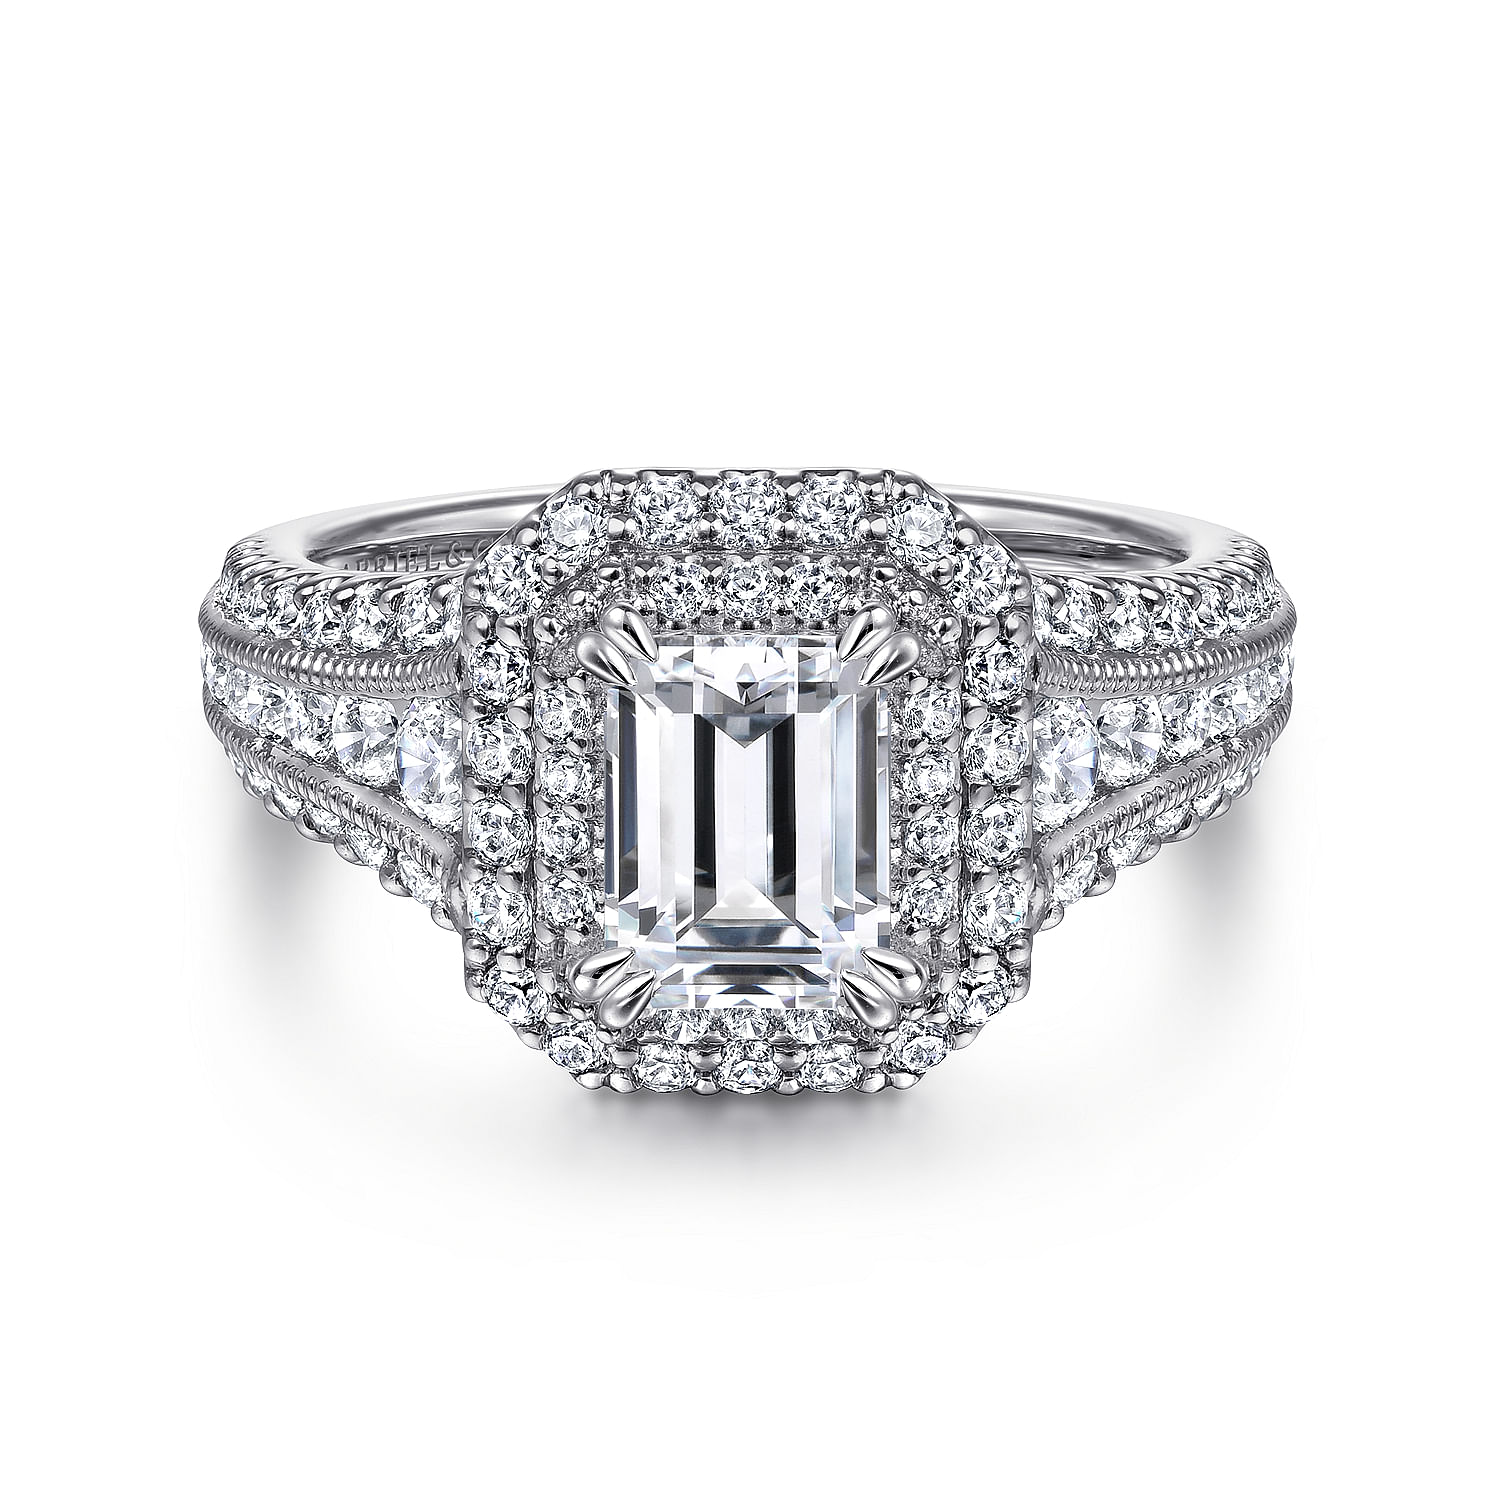 Henrietta - 14K White Gold Emerald Cut Diamond Engagement Ring